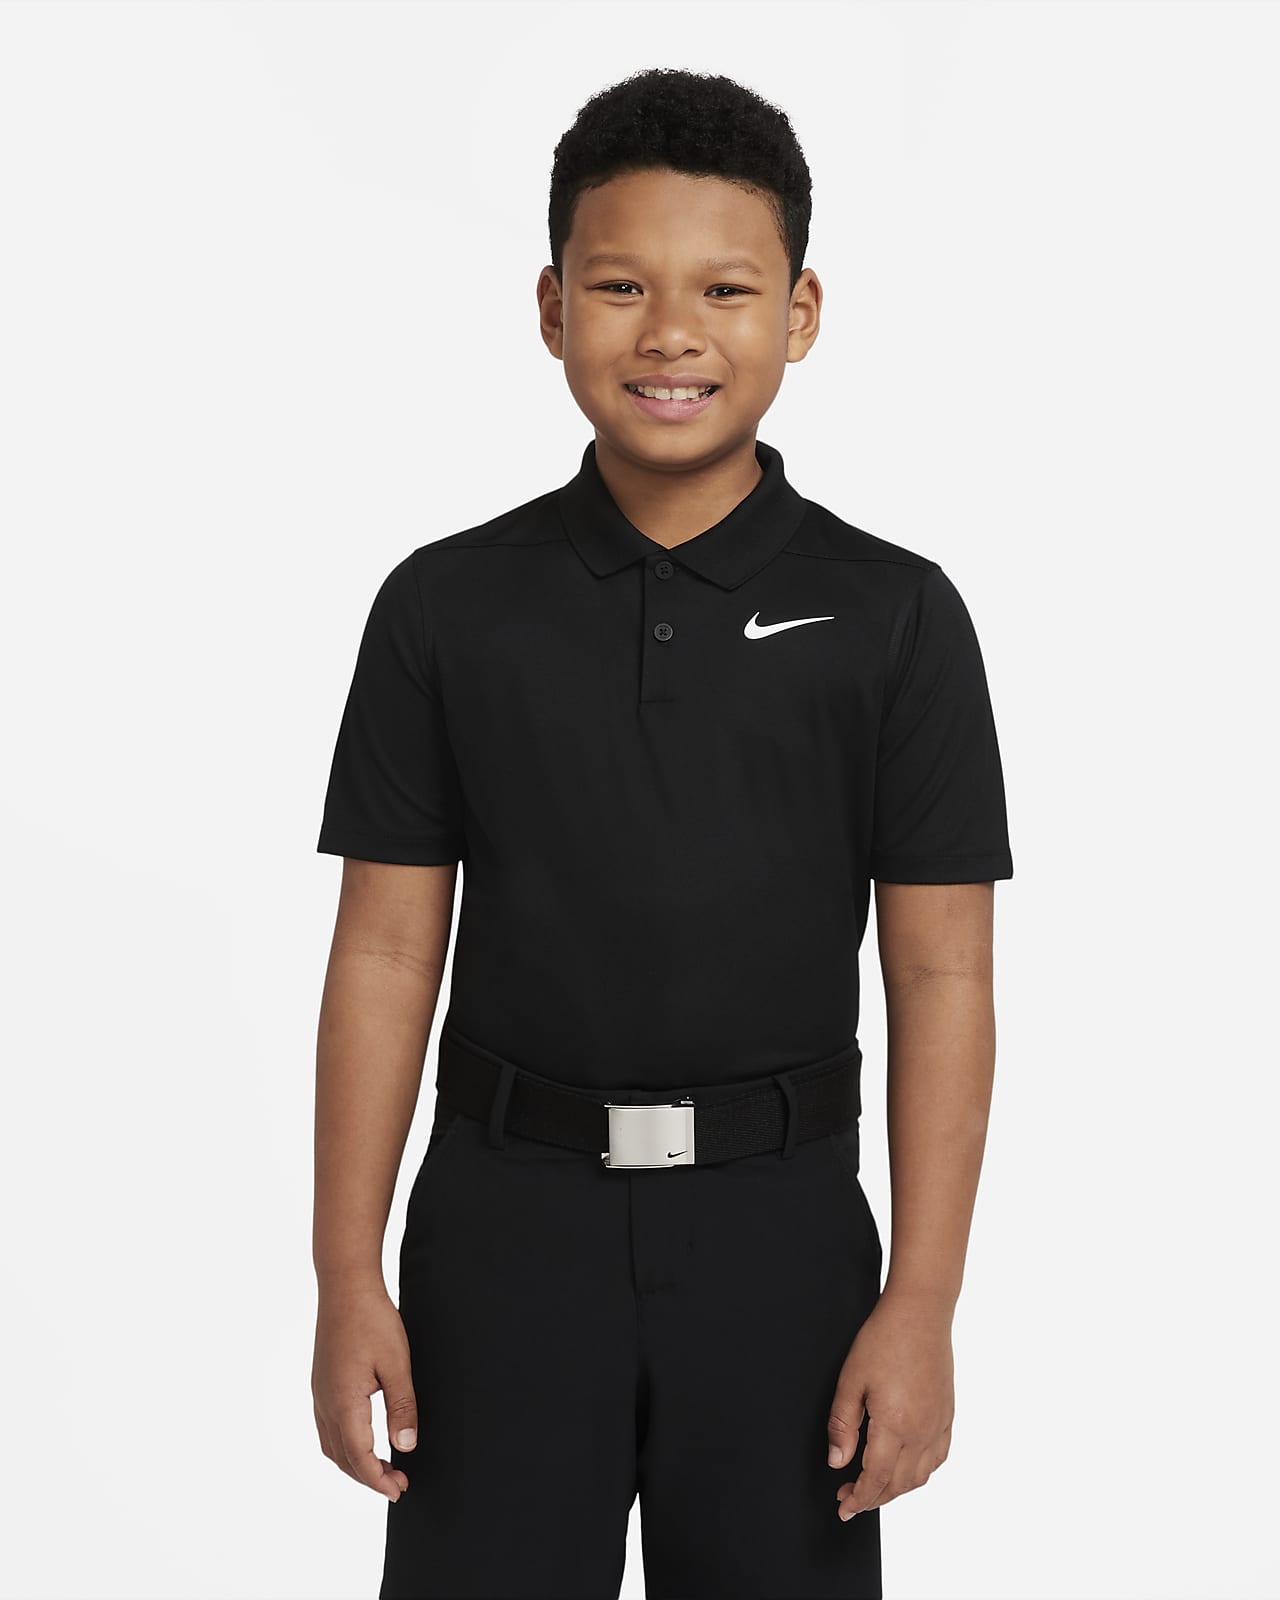 Nike Golf Dri-Fit Victory pants in black